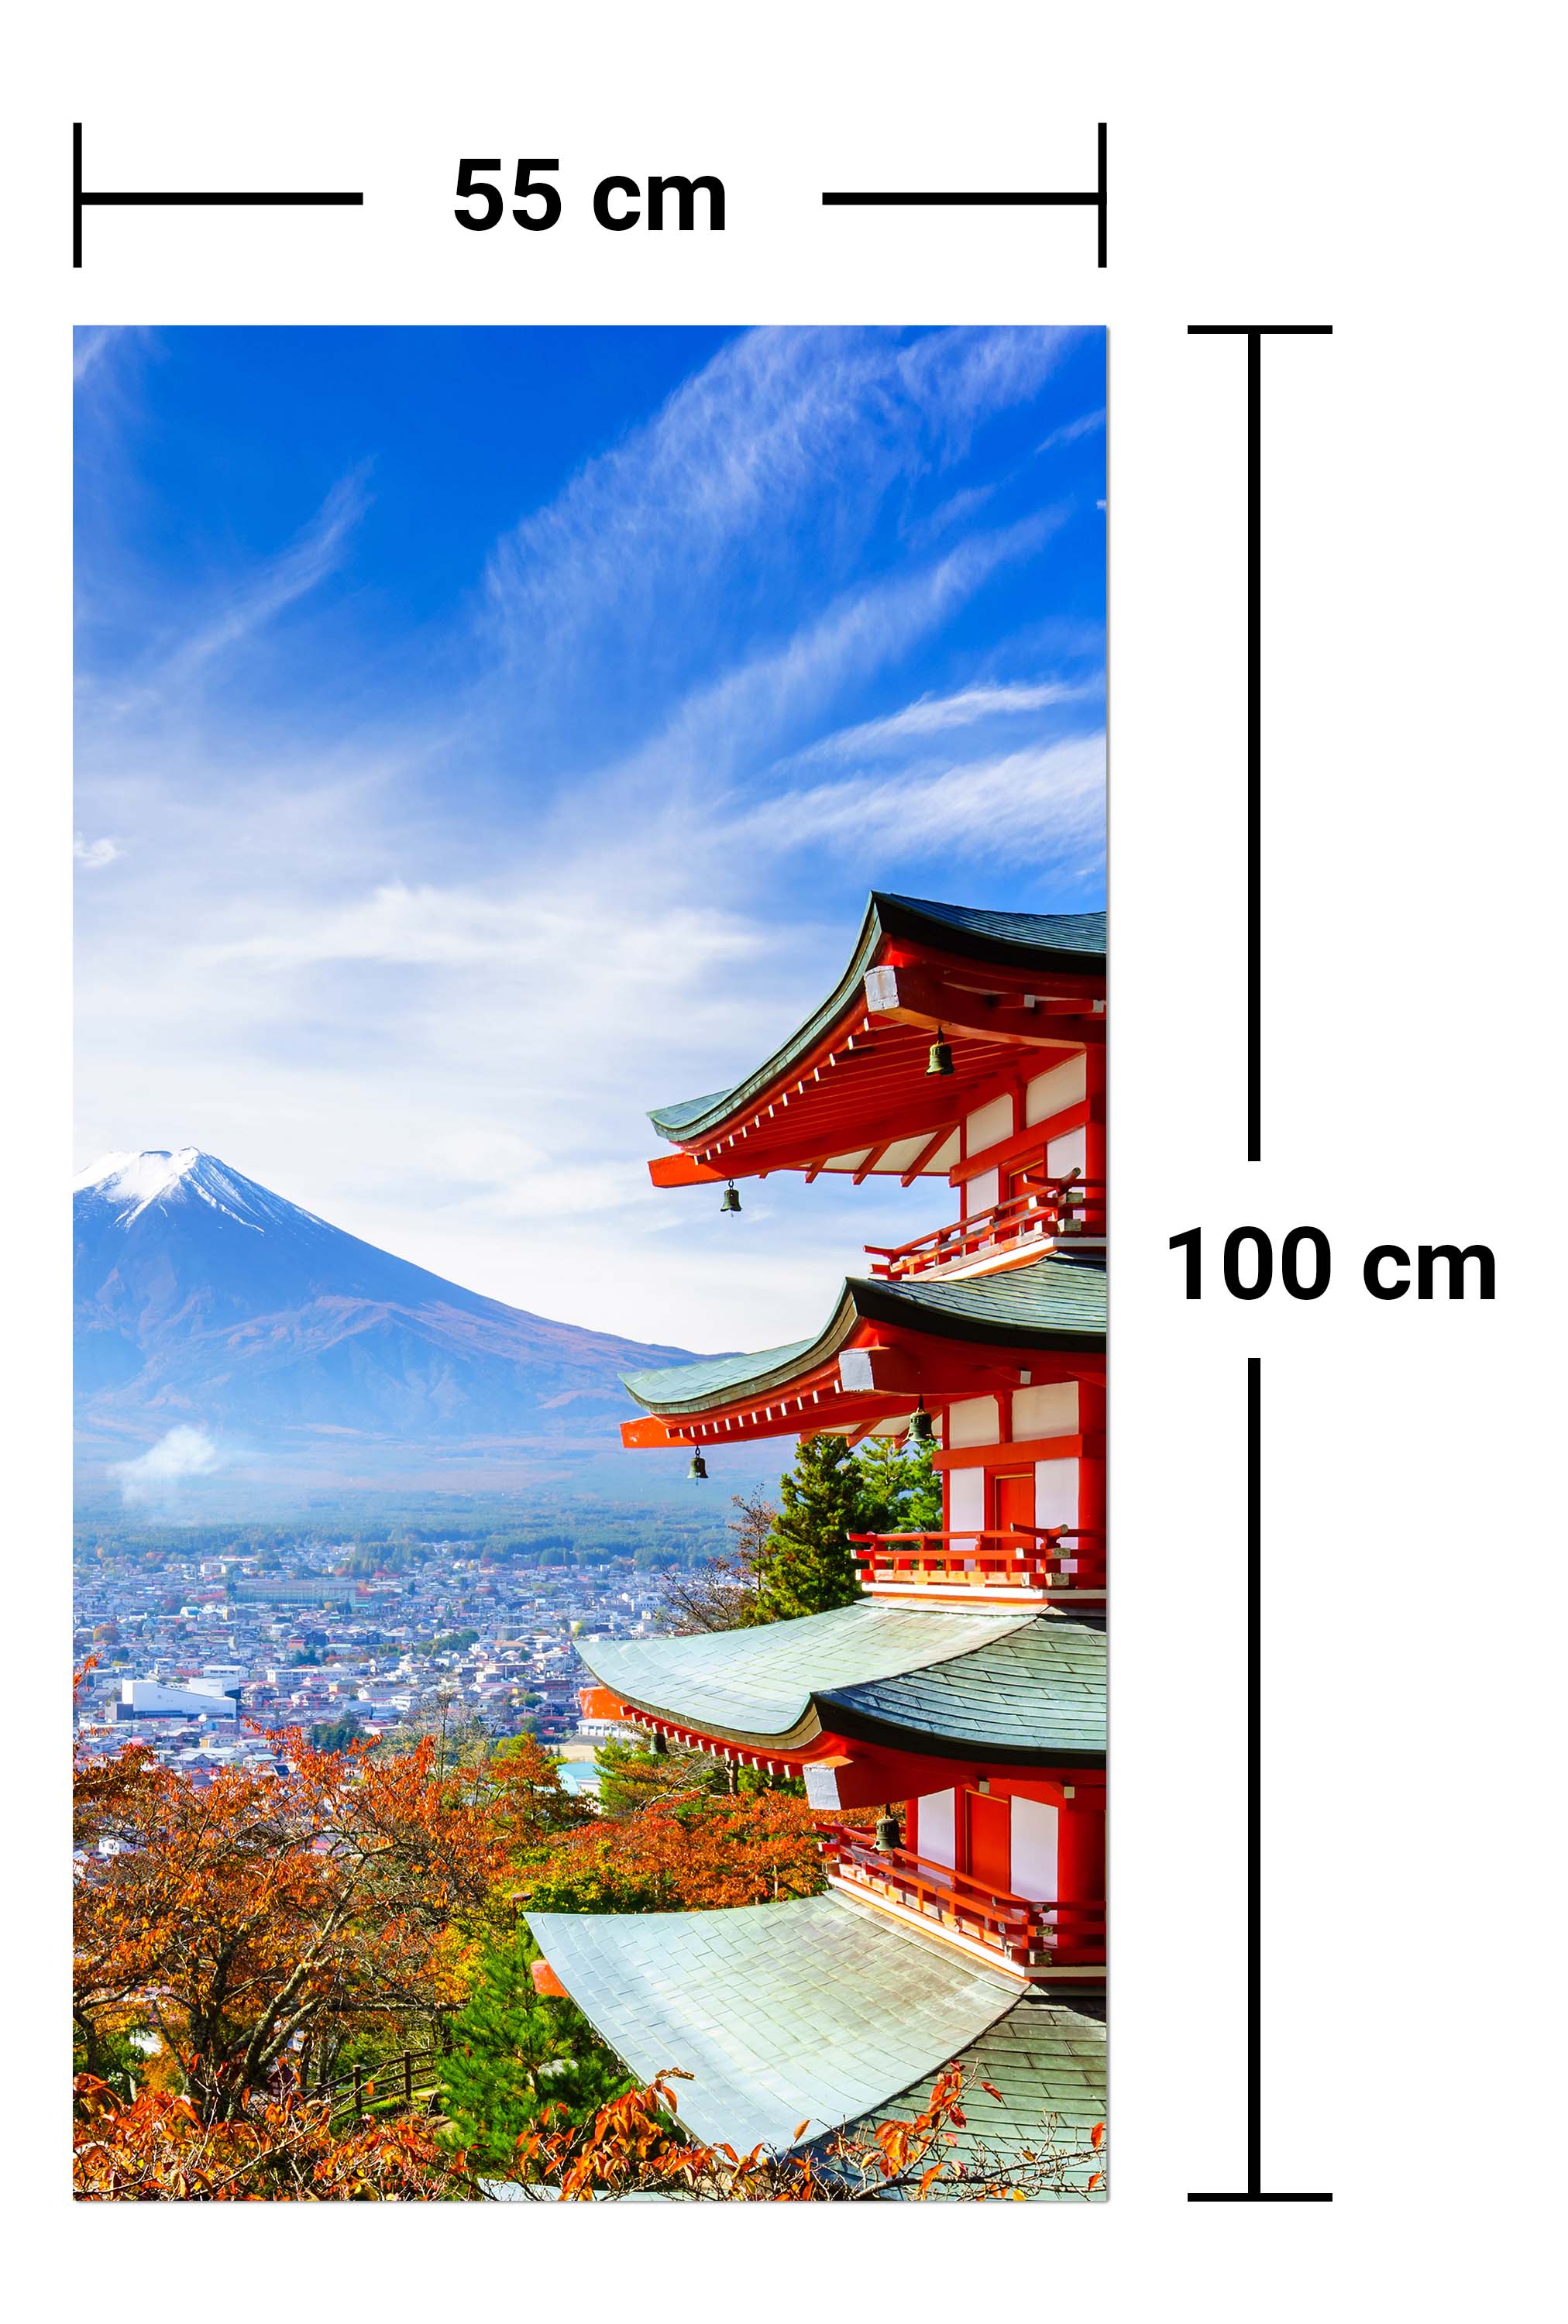 Garderobe Mount Fuji-Chureito Pagoda M0552 entdecken - Bild 7